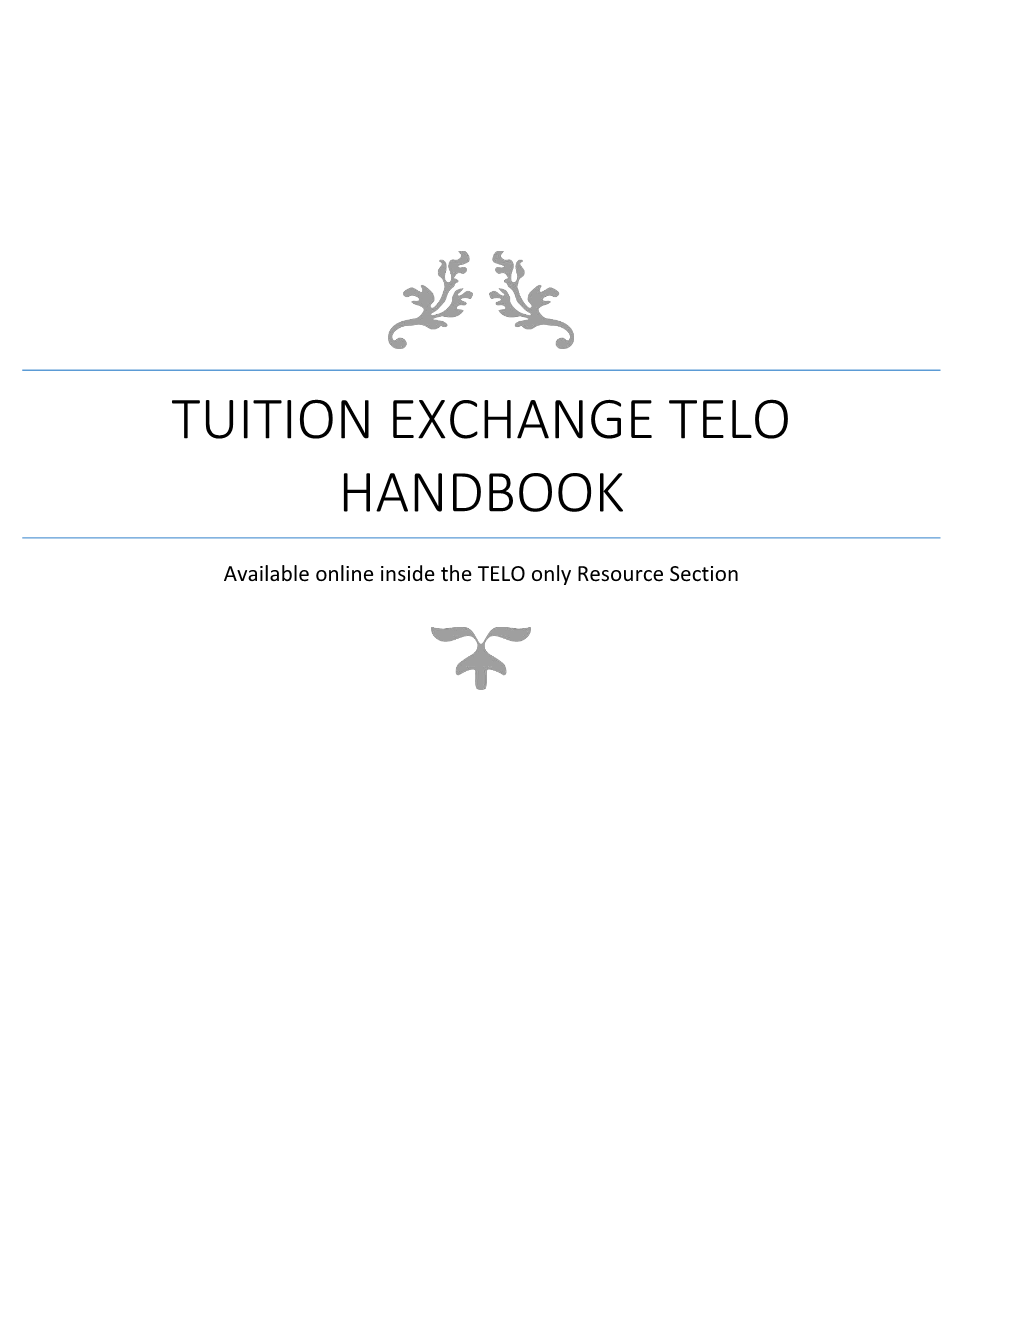 TUITION EXCHANGE TELO Handbook